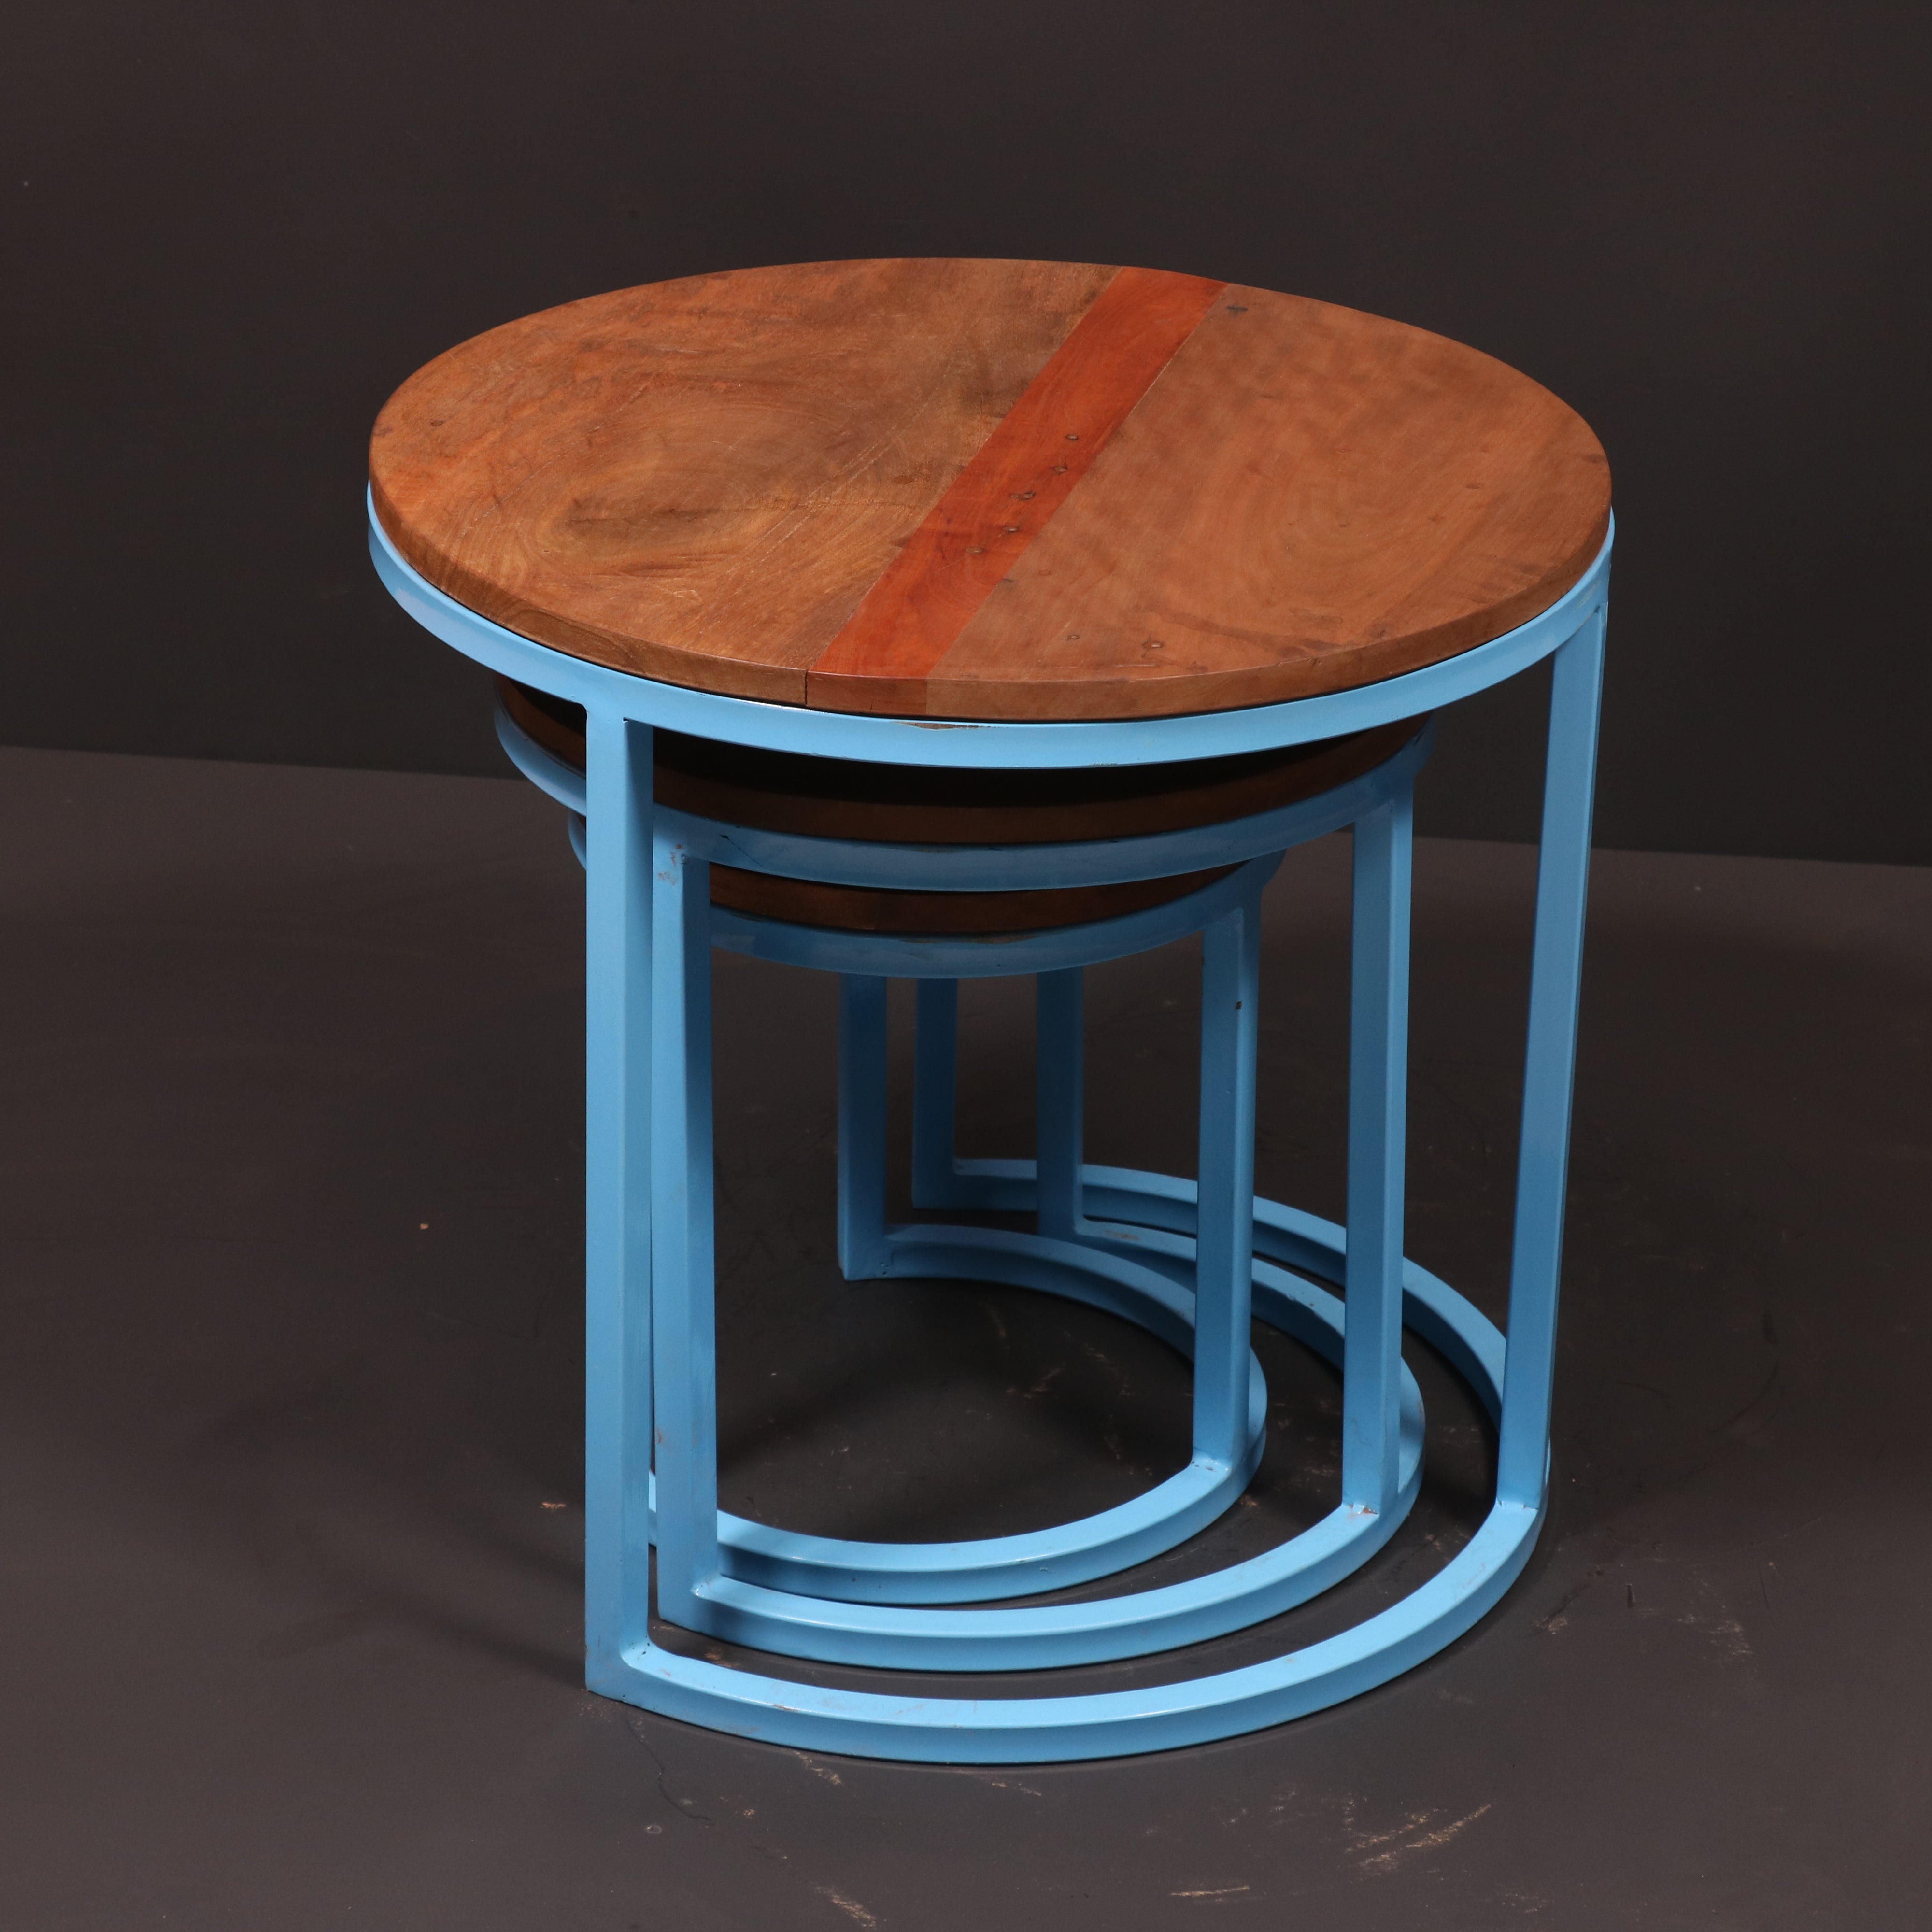 (Set of 3) Metallic Table Stand Set of 3 Stool